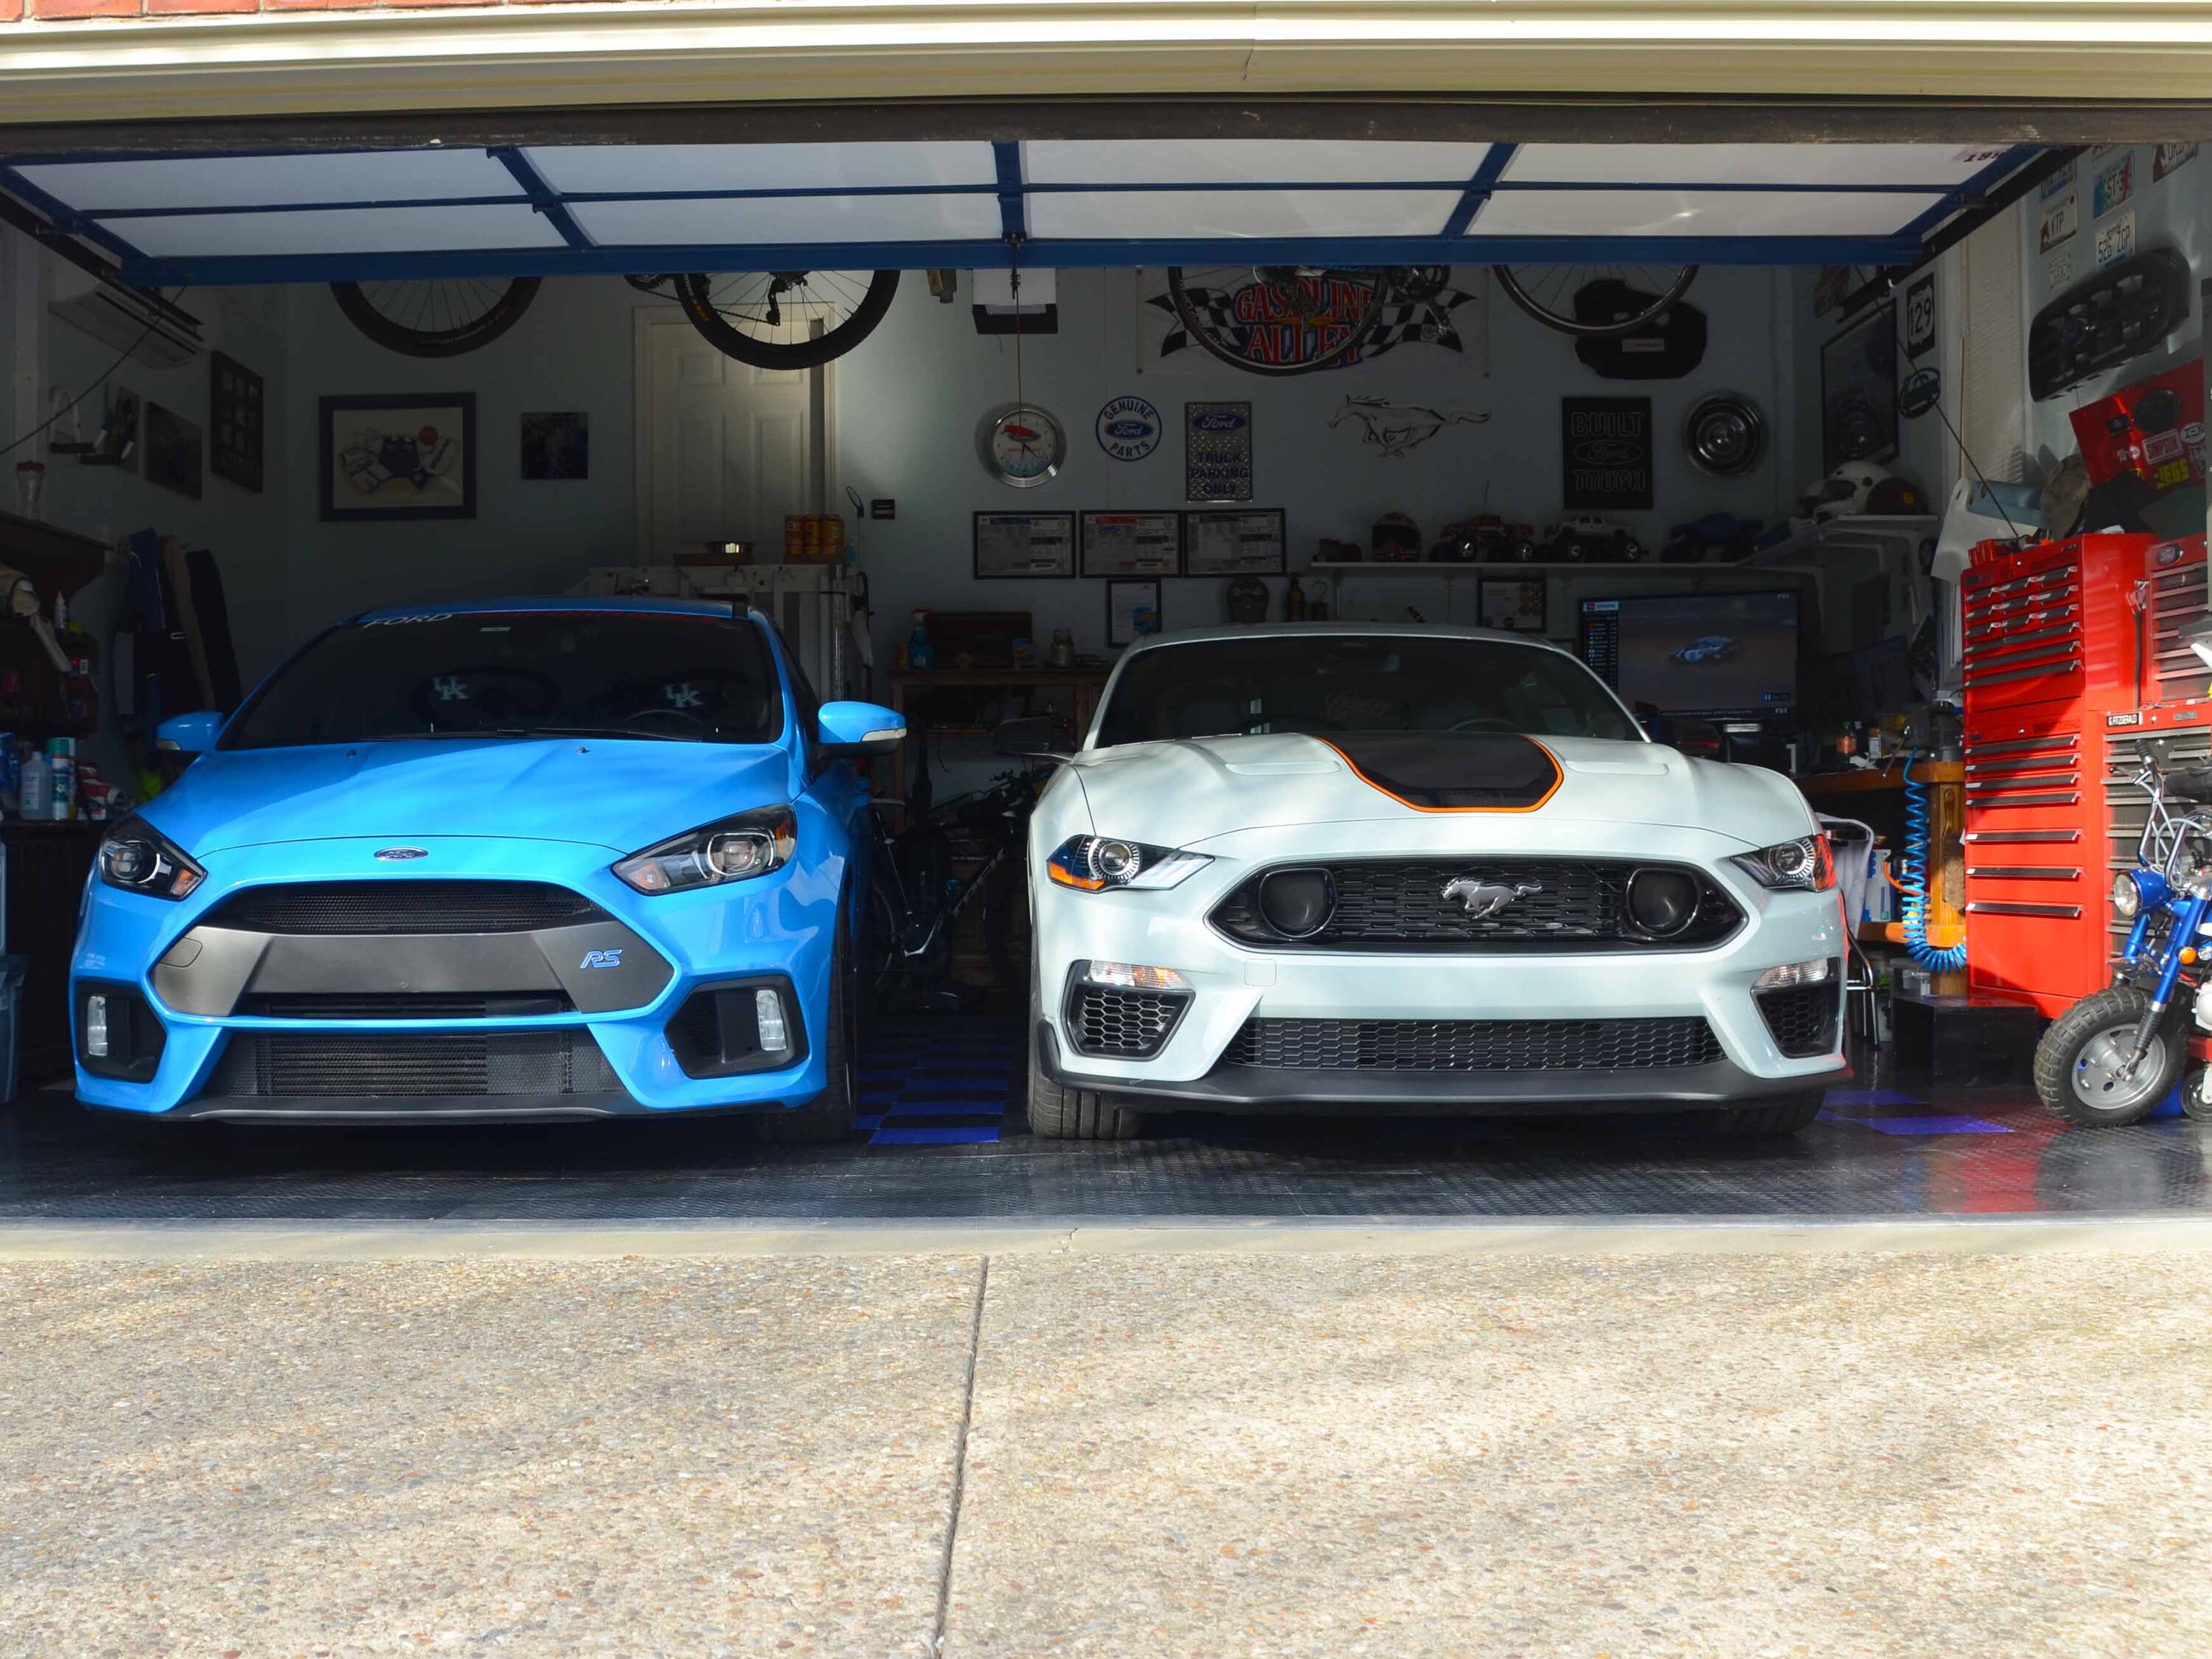 Dream car garage 1 web.jpg